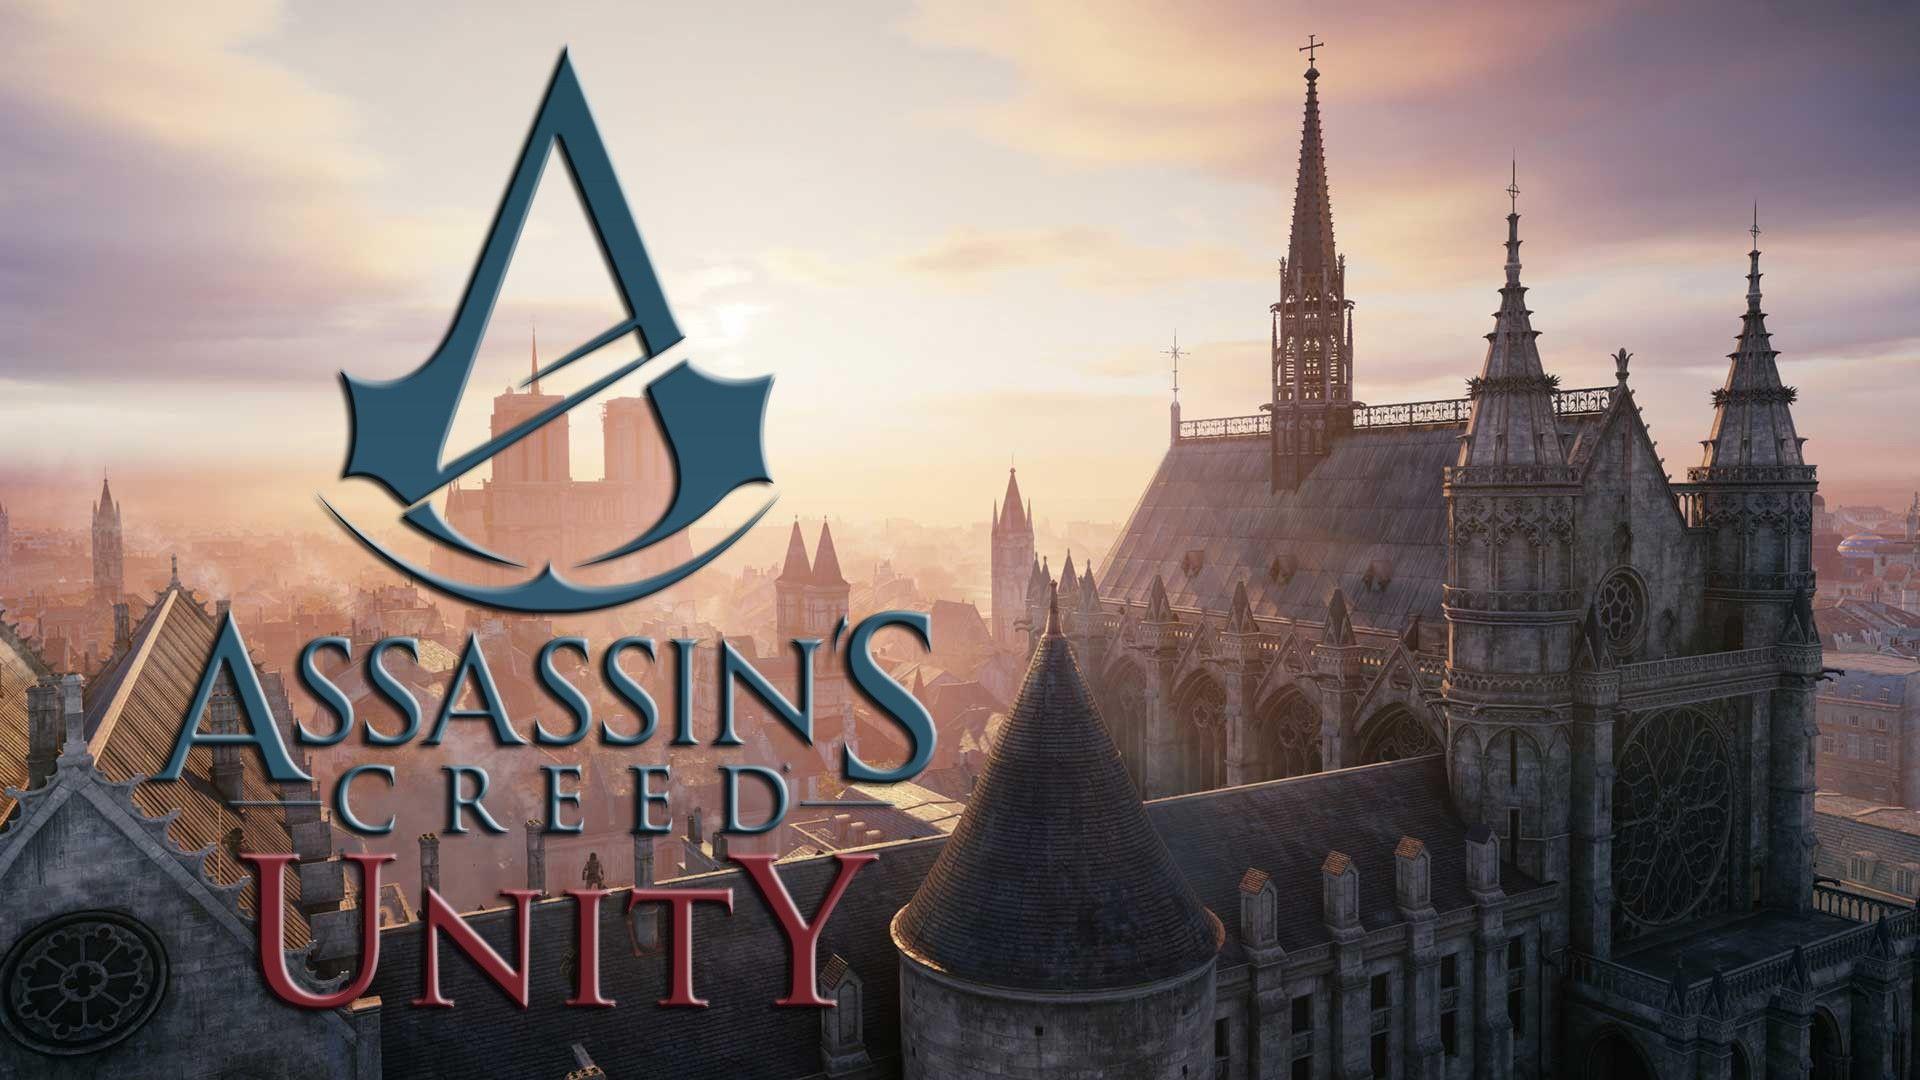 Assassins Creed Unity Logo Wallpaper 8454 2560 x 1440